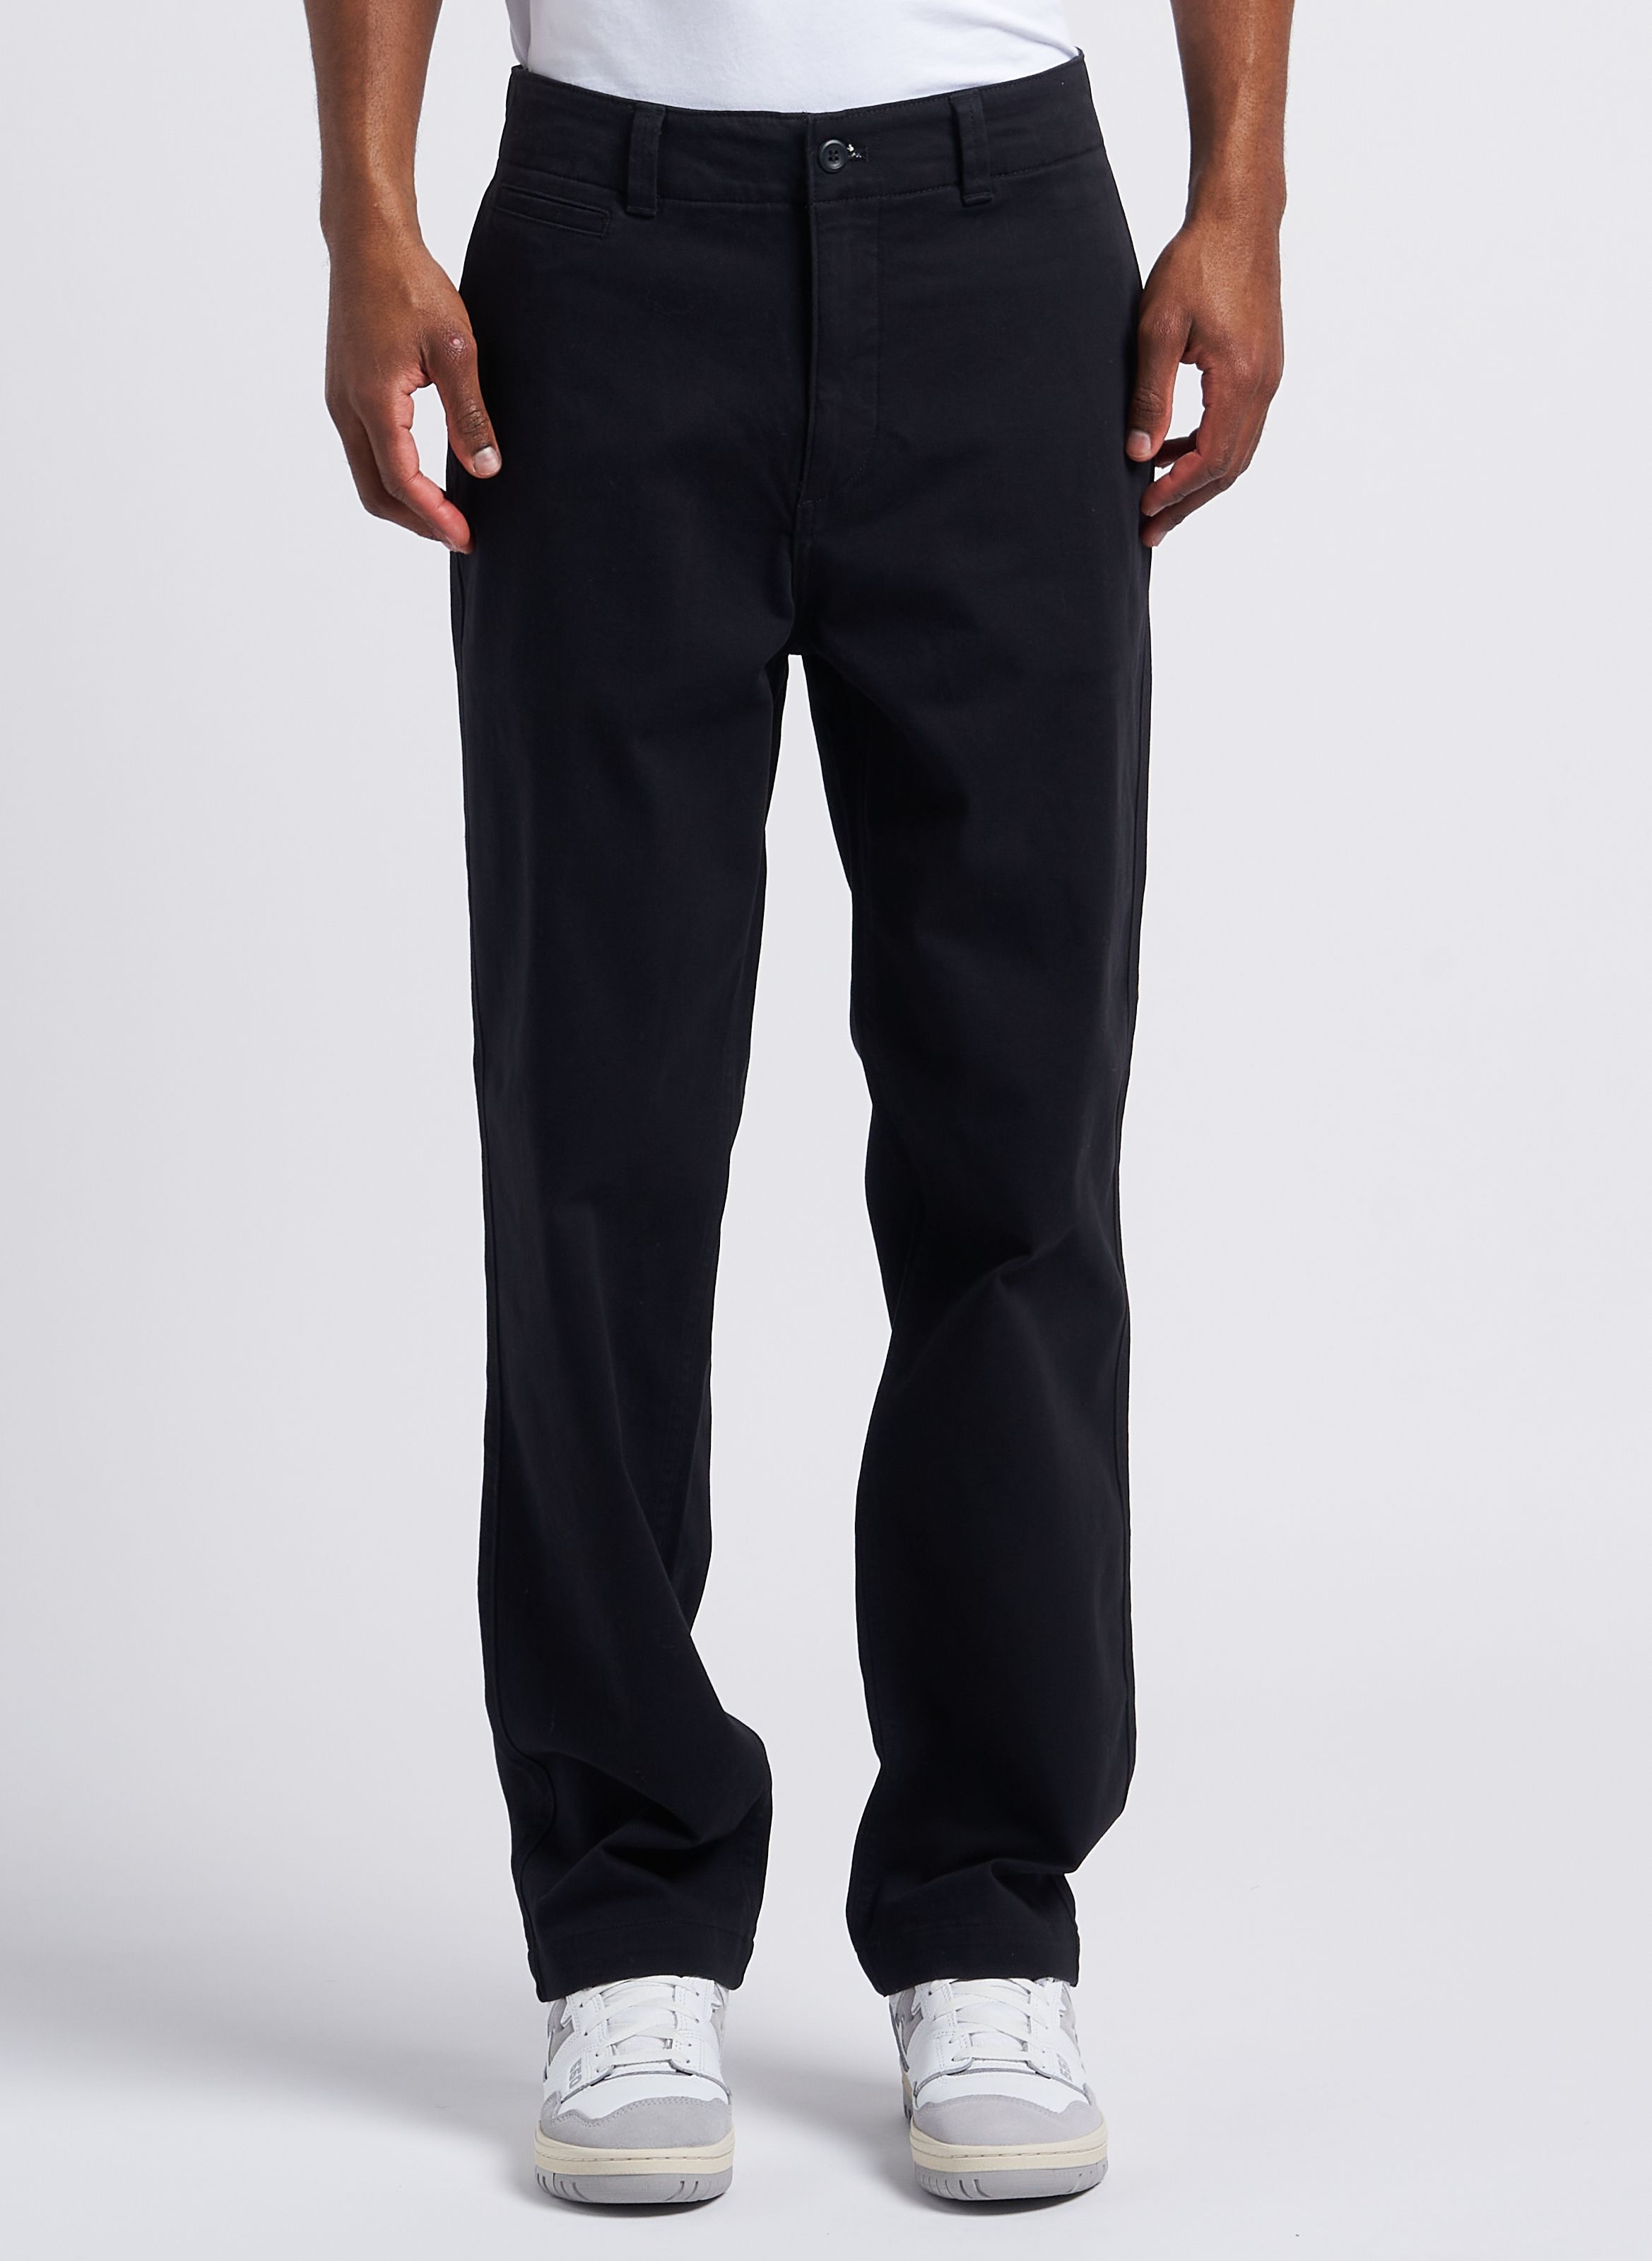 Dockers Pants Men Size 28x32 Black Khaki Slim Fit Best Pressed No Wrinkle  Crease | eBay